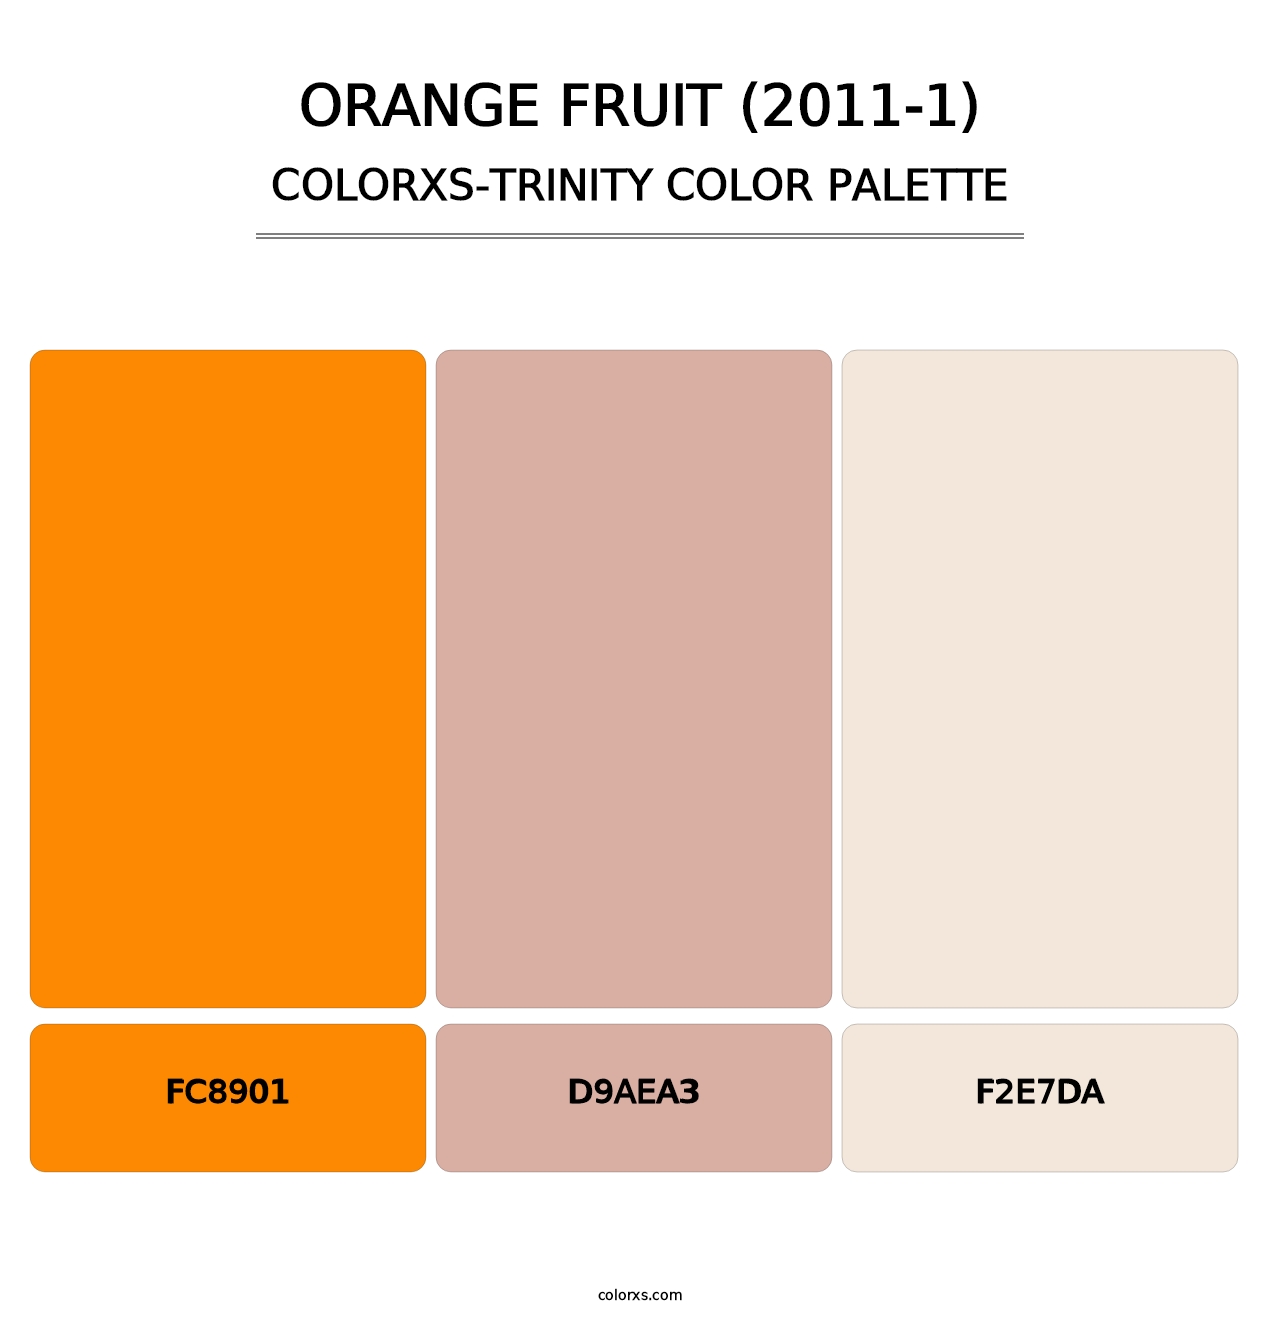 Orange Fruit (2011-1) - Colorxs Trinity Palette